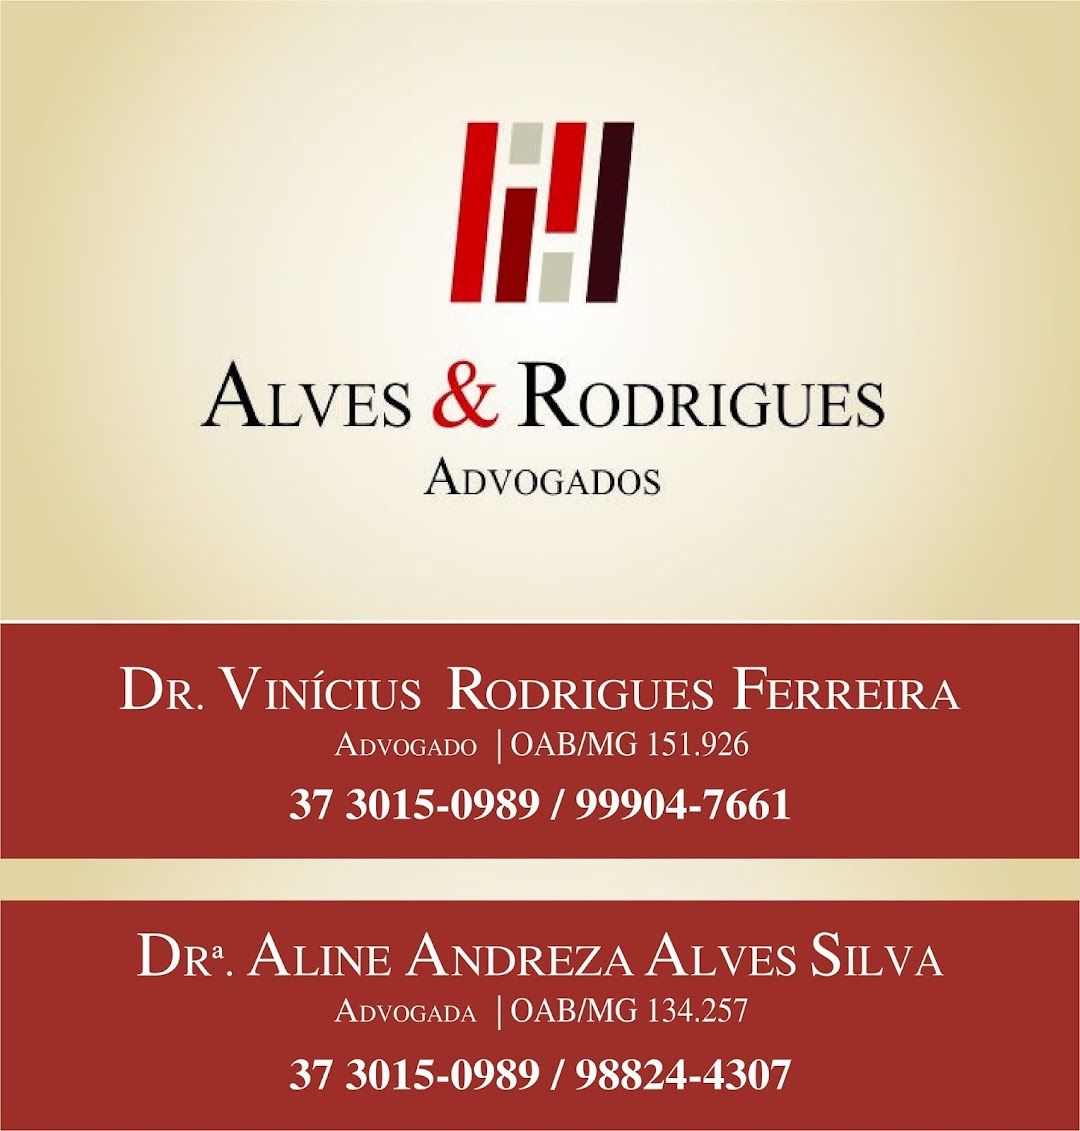 Alves & Rodrigues Advogados